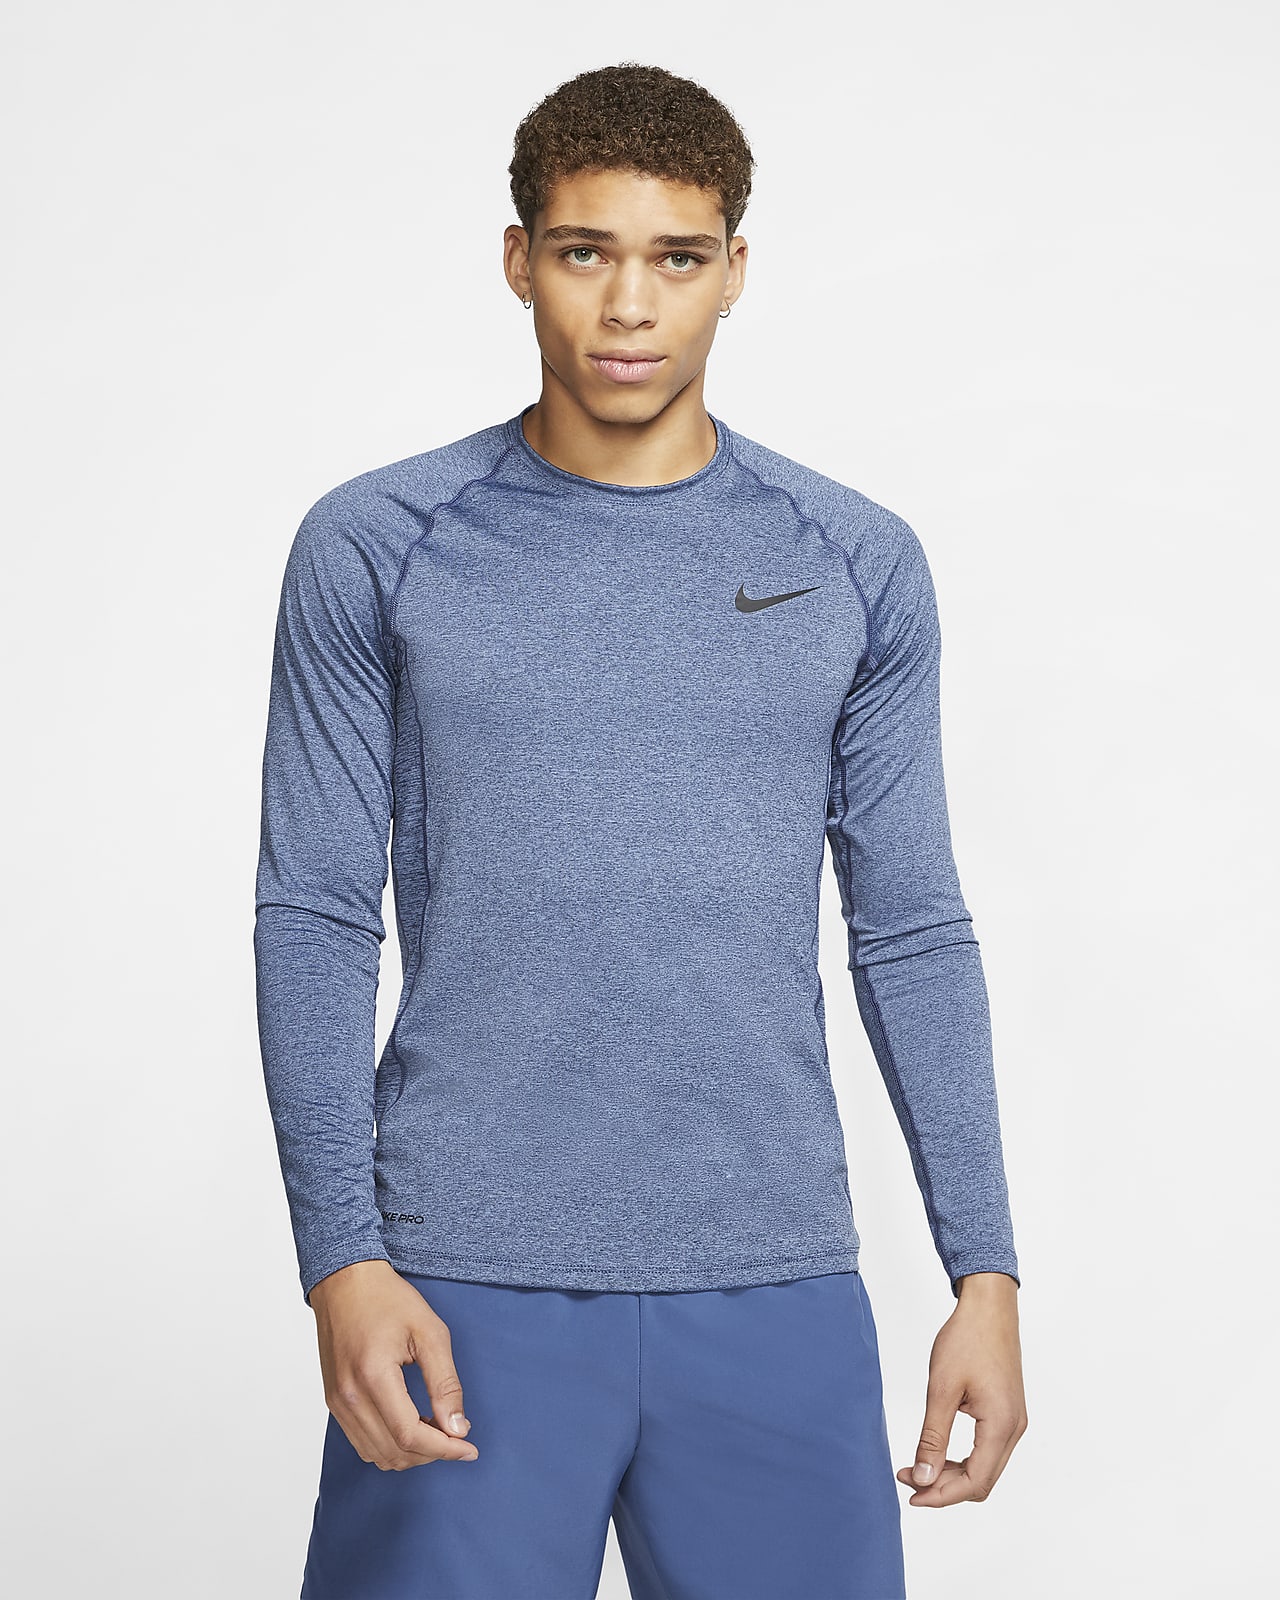 Nike Pro Men's Long-Sleeve Top. Nike.com